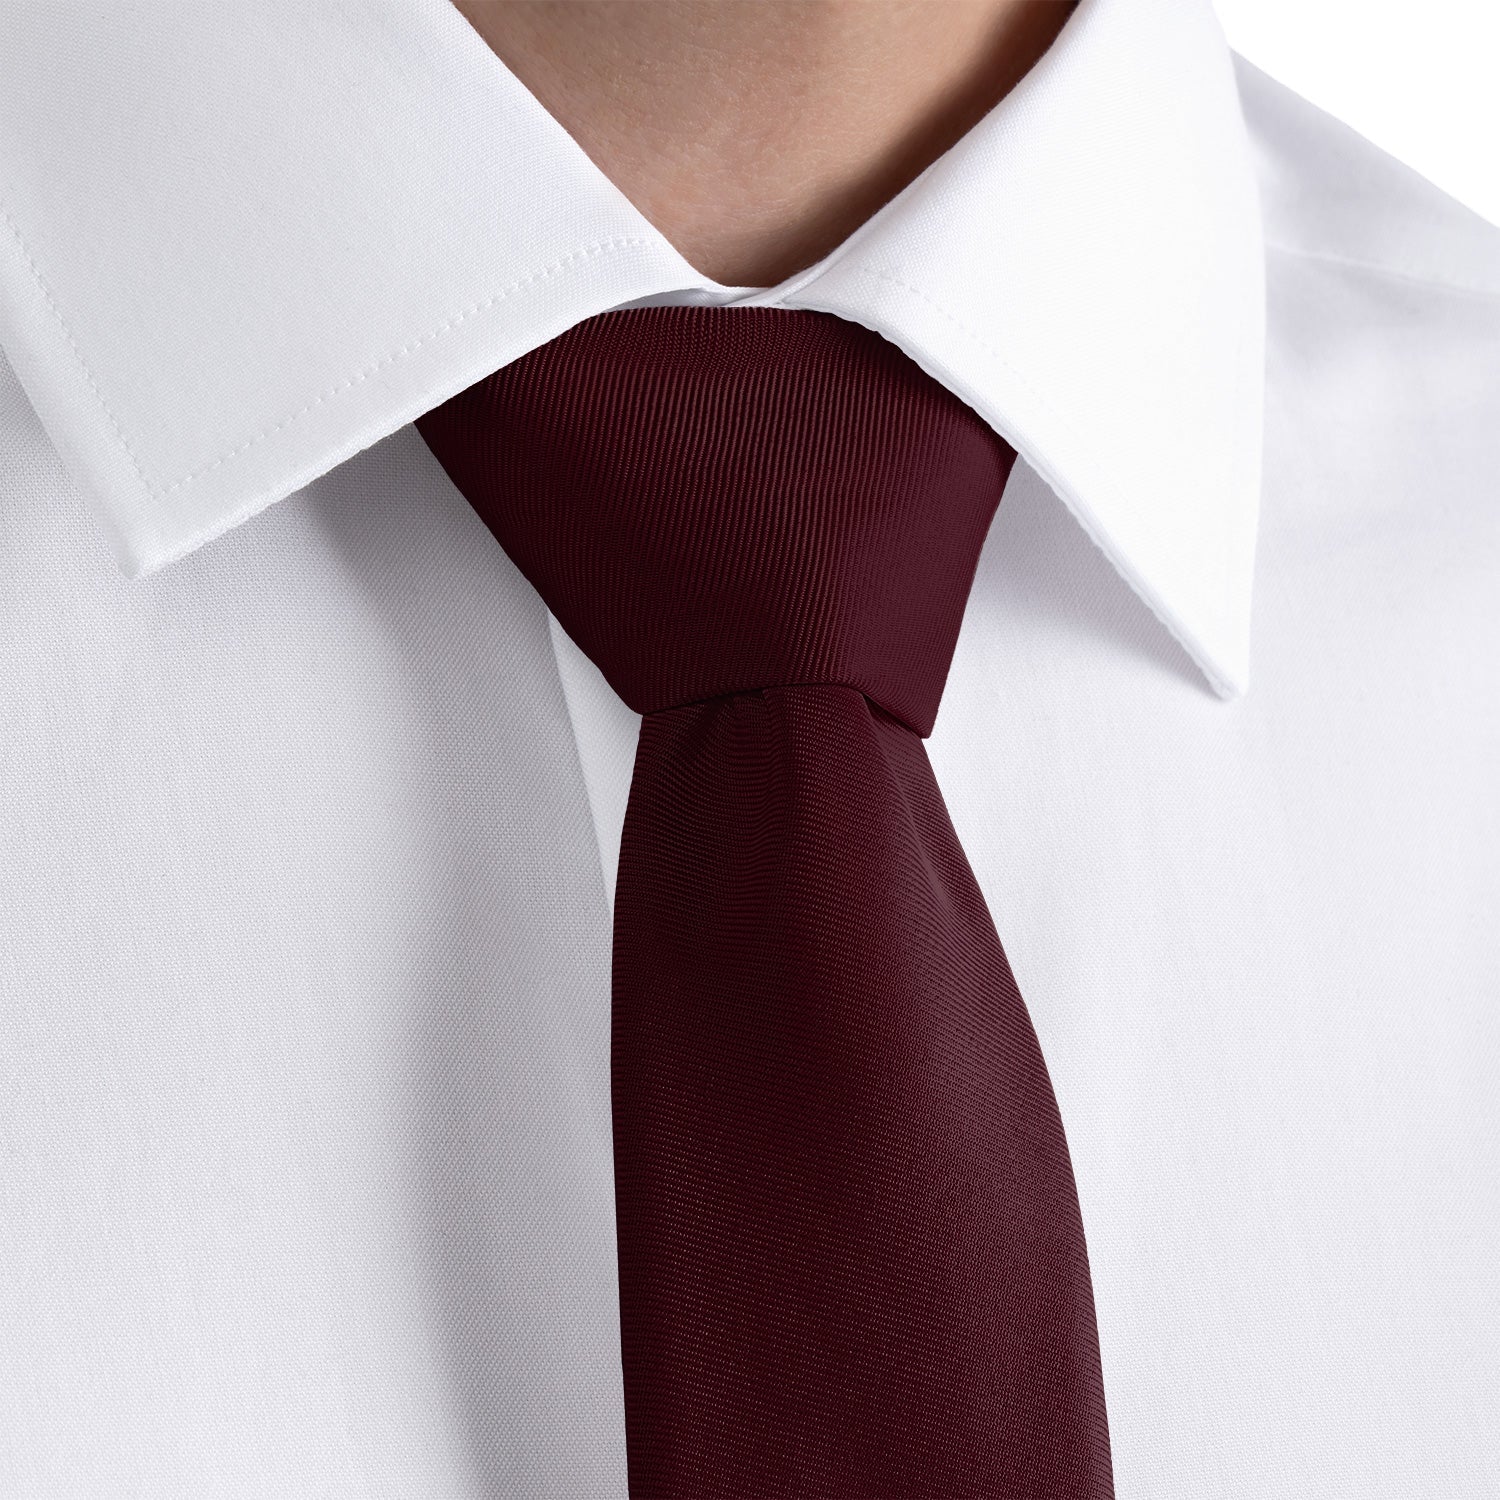 Azazie Sangria Necktie - Rolled - Knotty Tie Co.